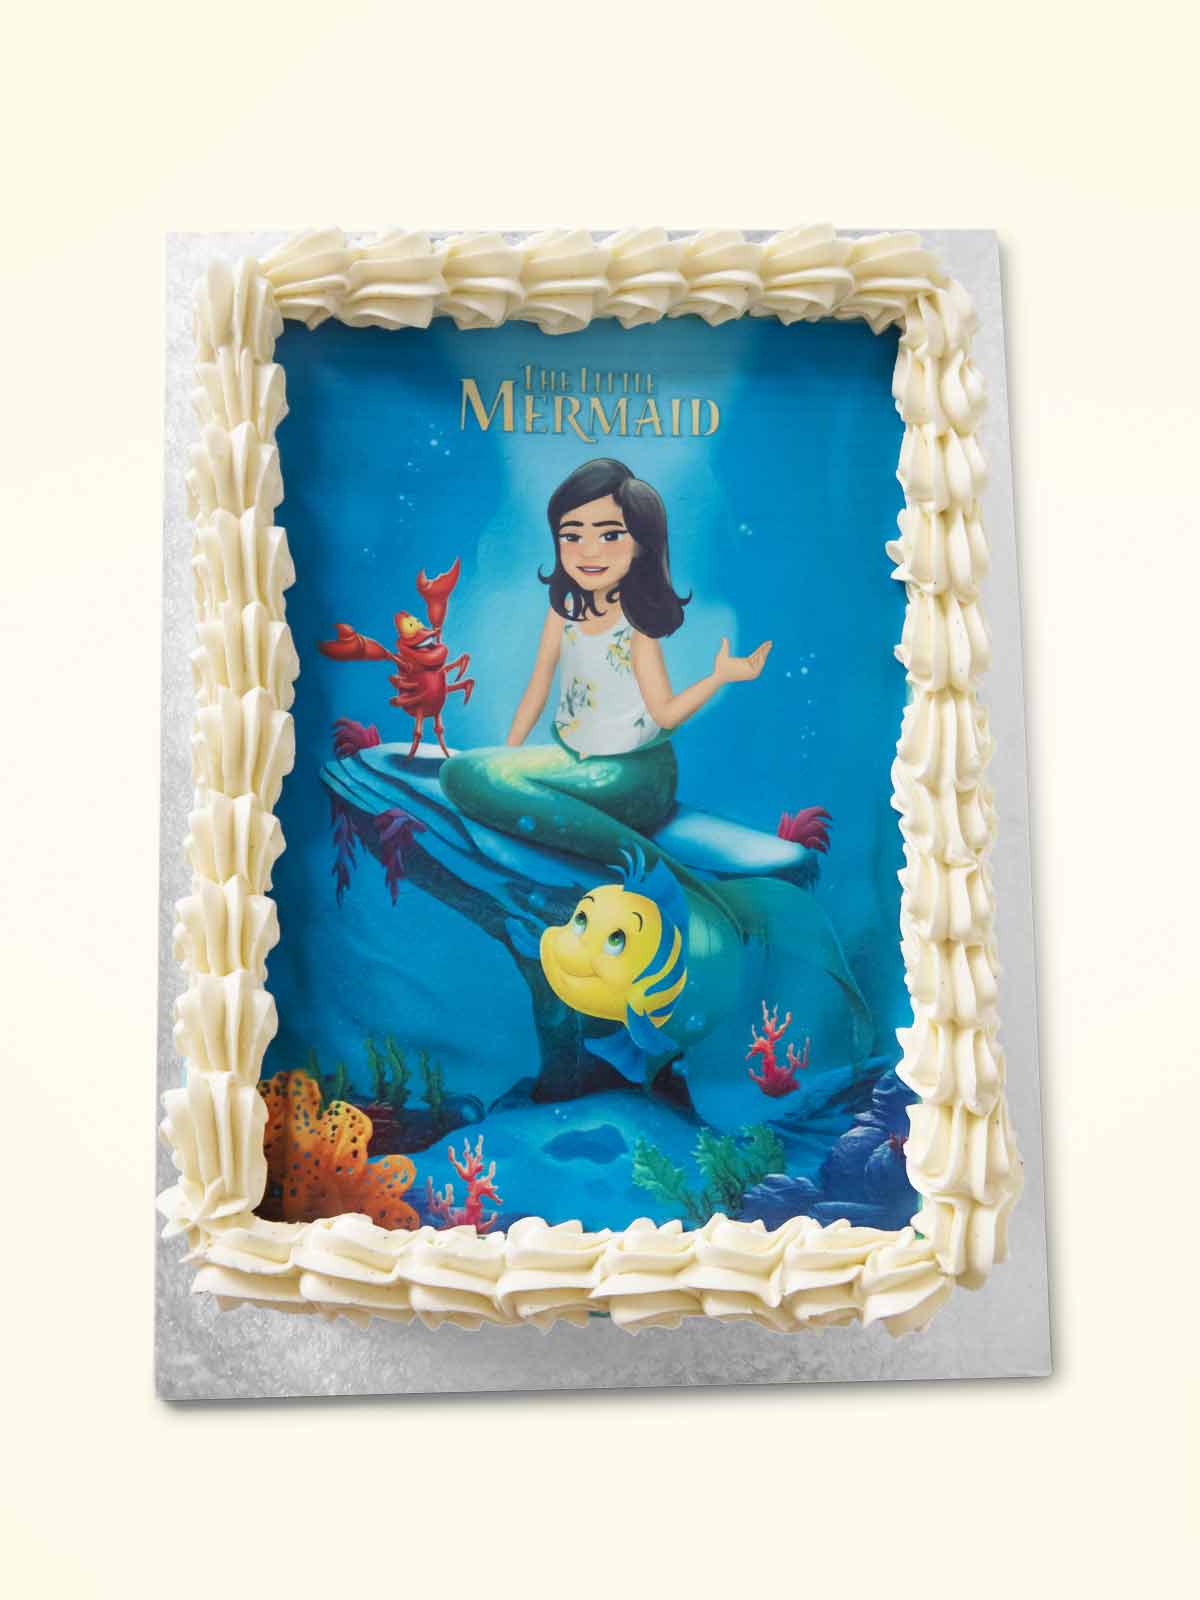 Bespoke Little Mermaid Birthday Cake Delivered in London, Surrey, Berkshire